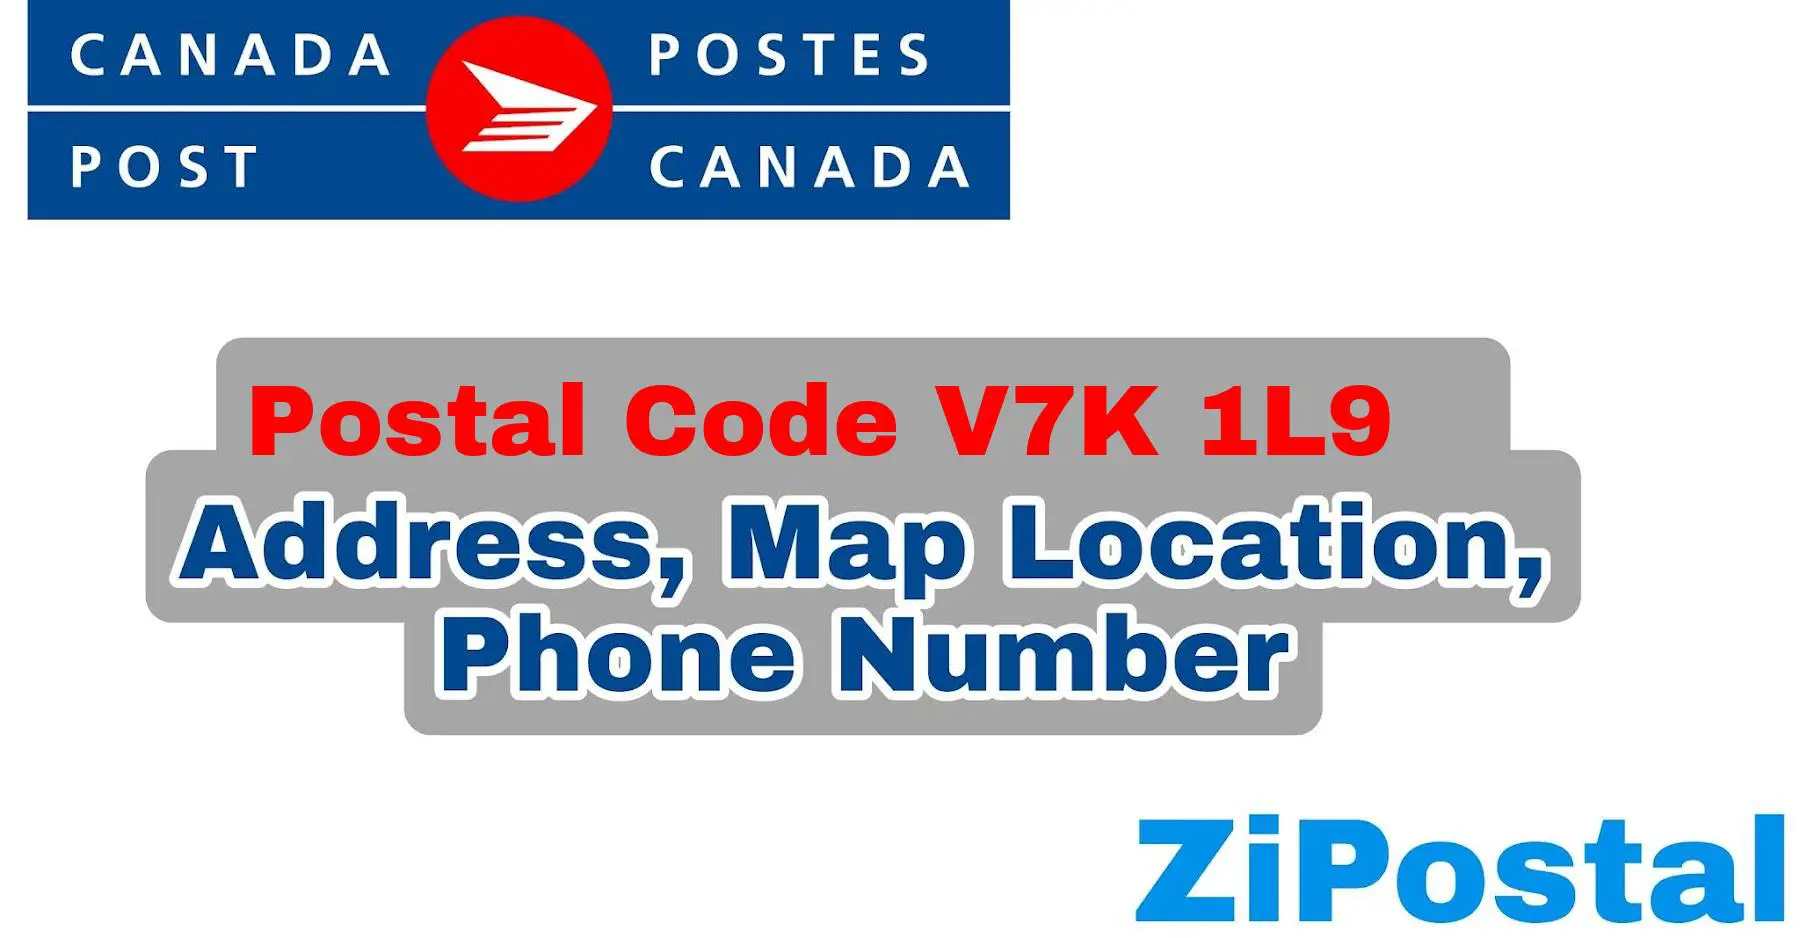 Postal Code V7K 1L9 Address Map Location and Phone Number